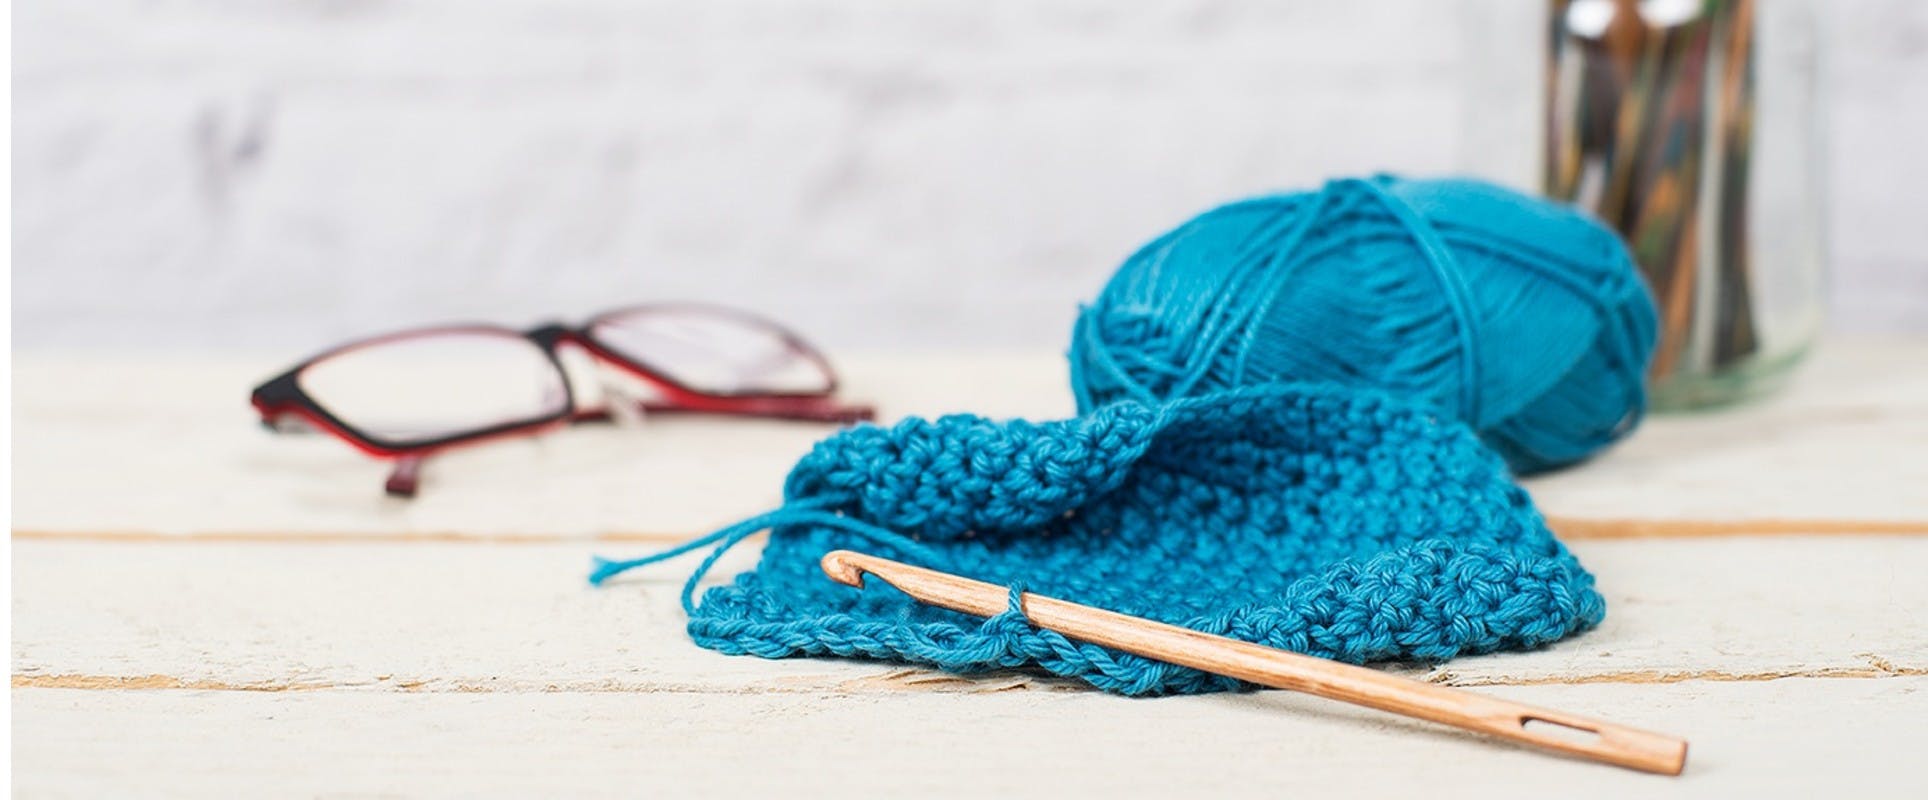 Useful Home Knitting Accessories DIY Knitting Tools Set - China